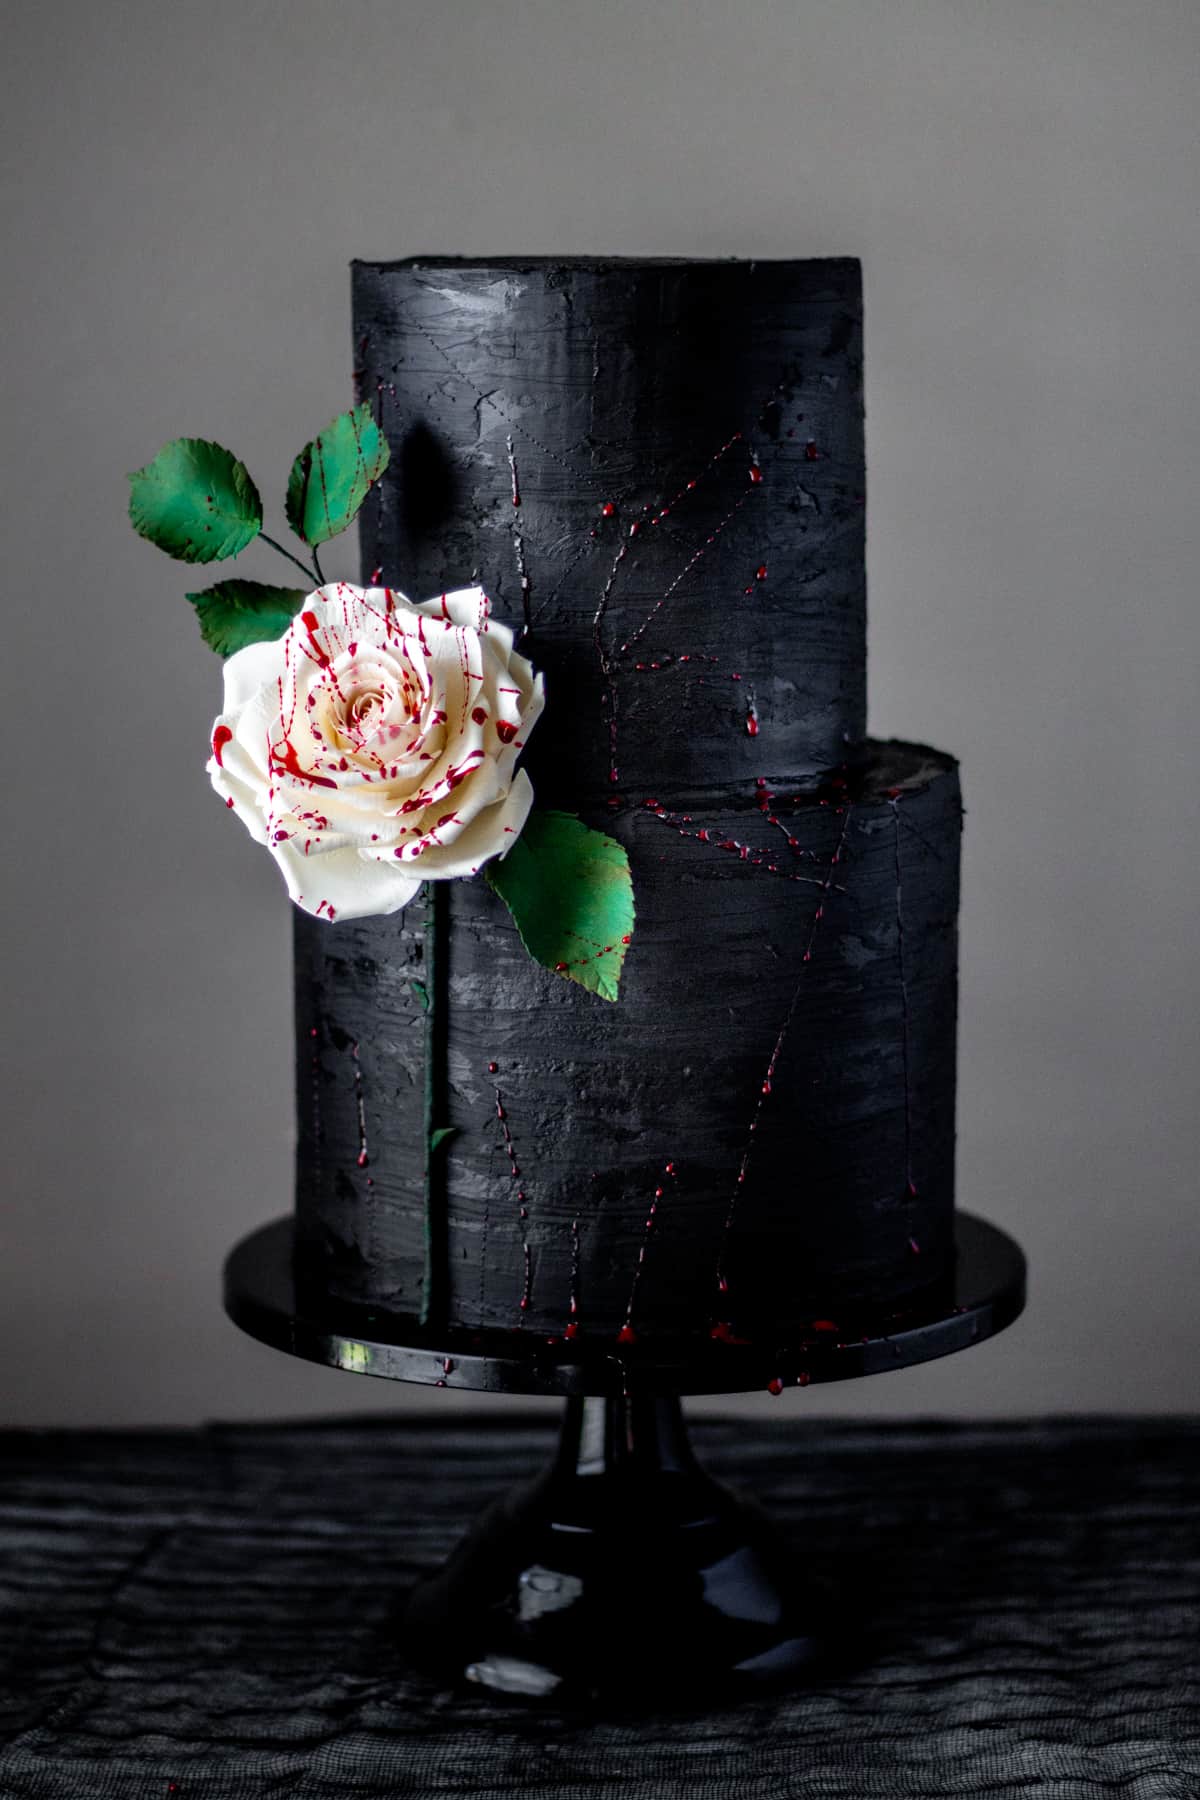 edible fake blood splattered rose and black ganache cake